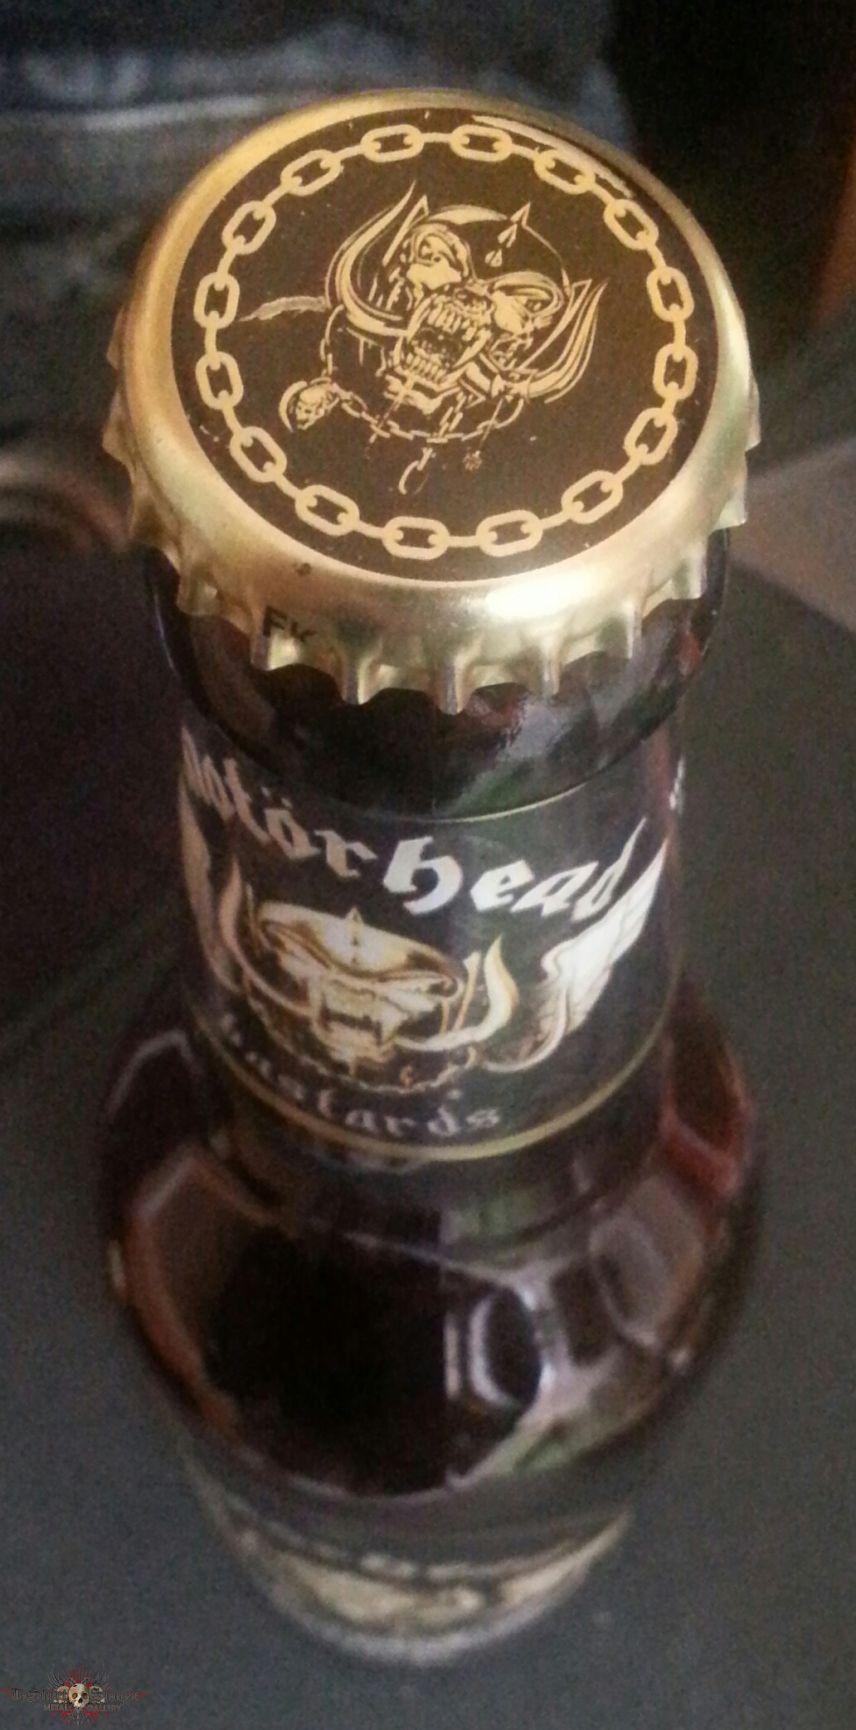 Motörhead beer bottle